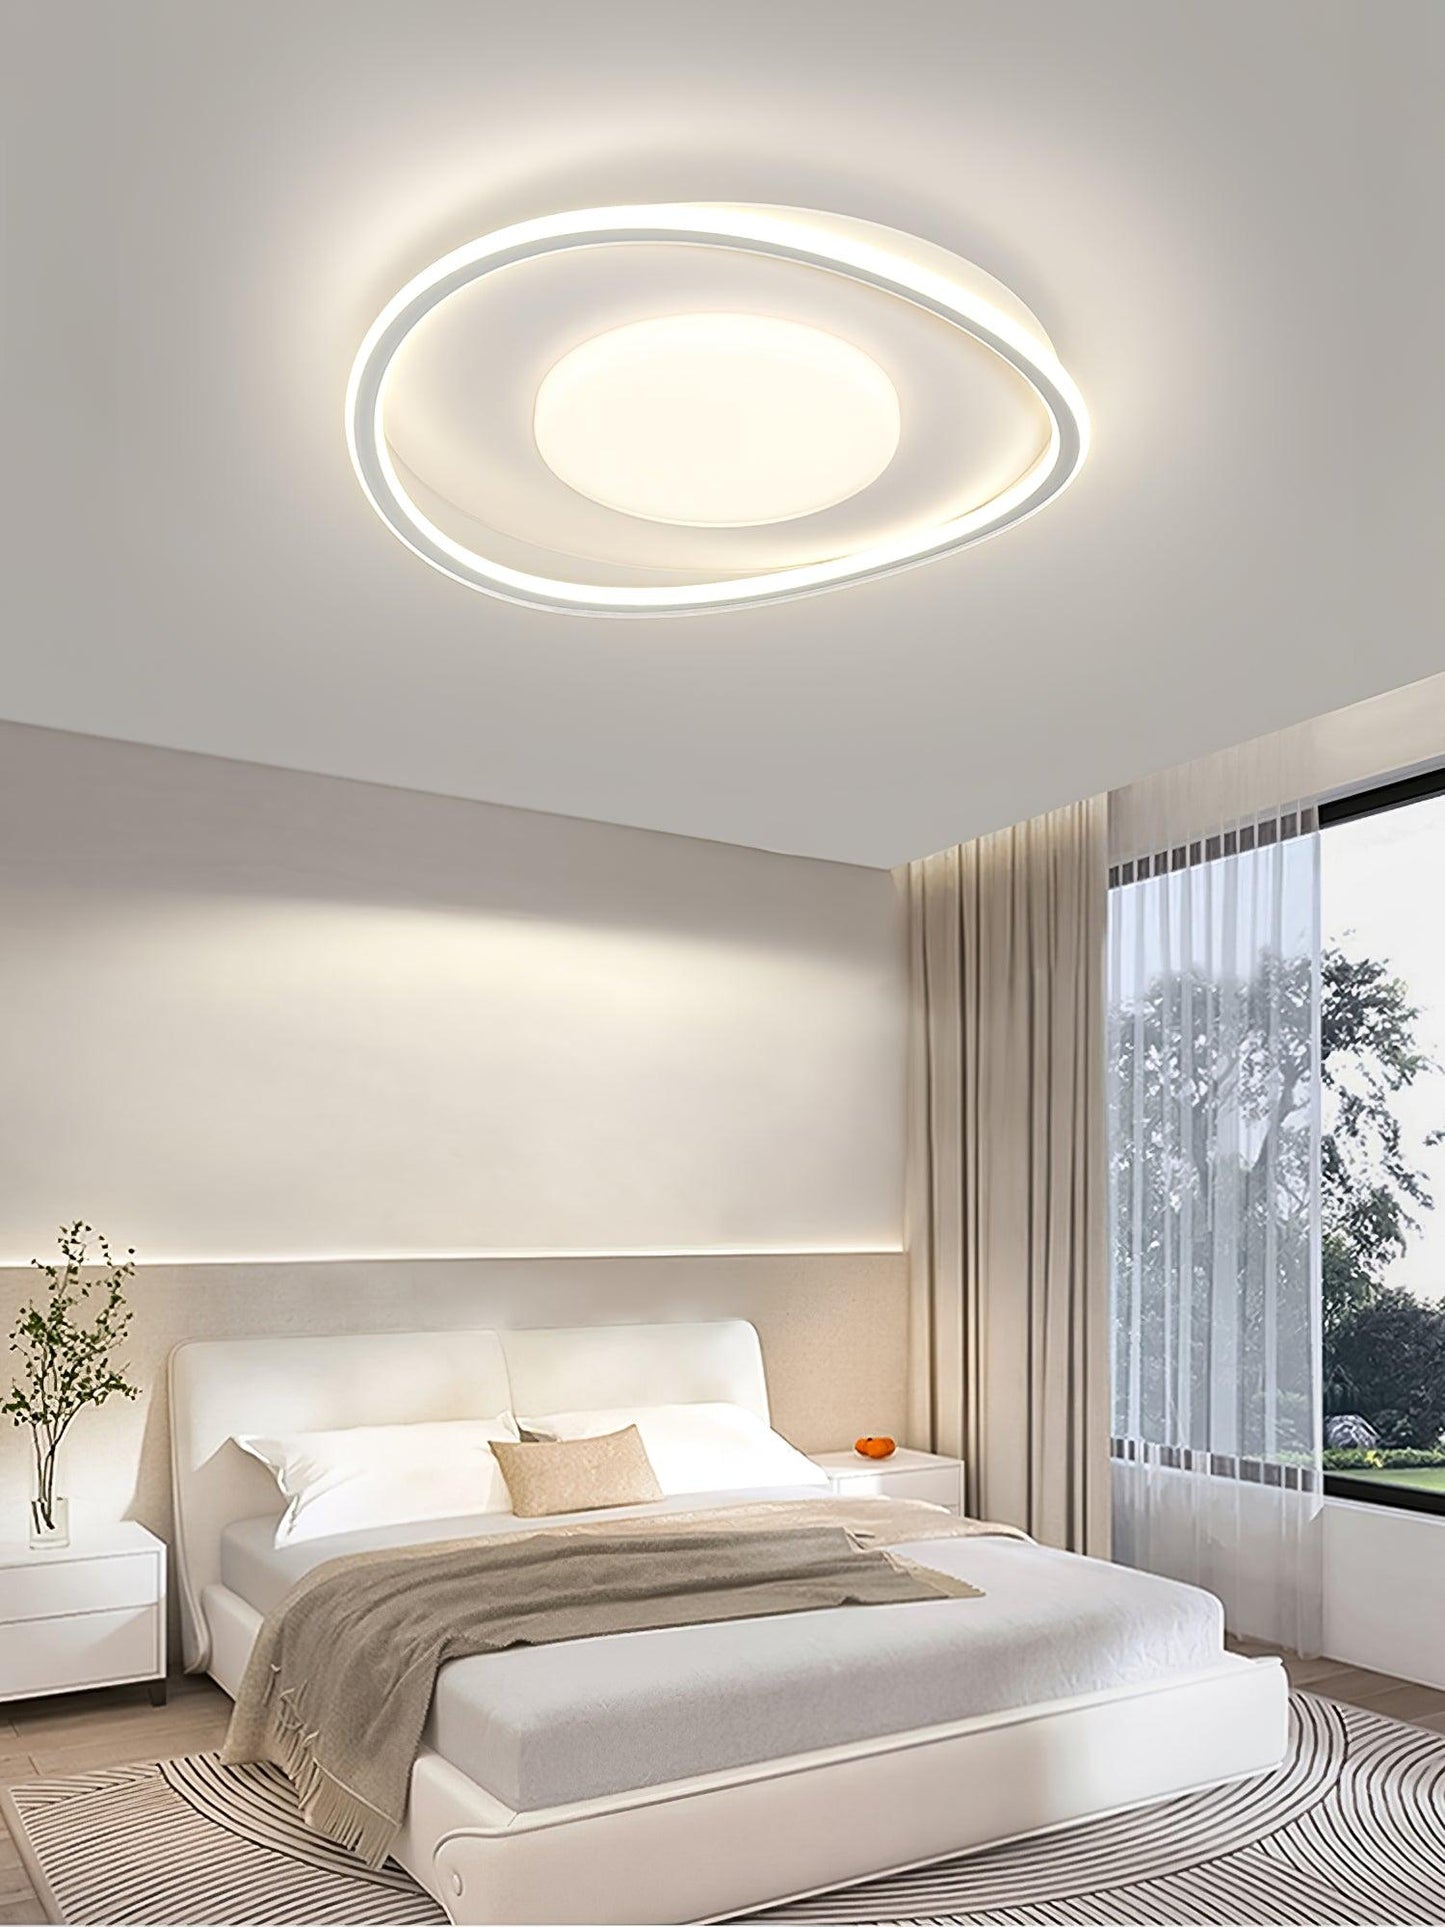 مصباح سقف LED بتصميم هندسي بسيط